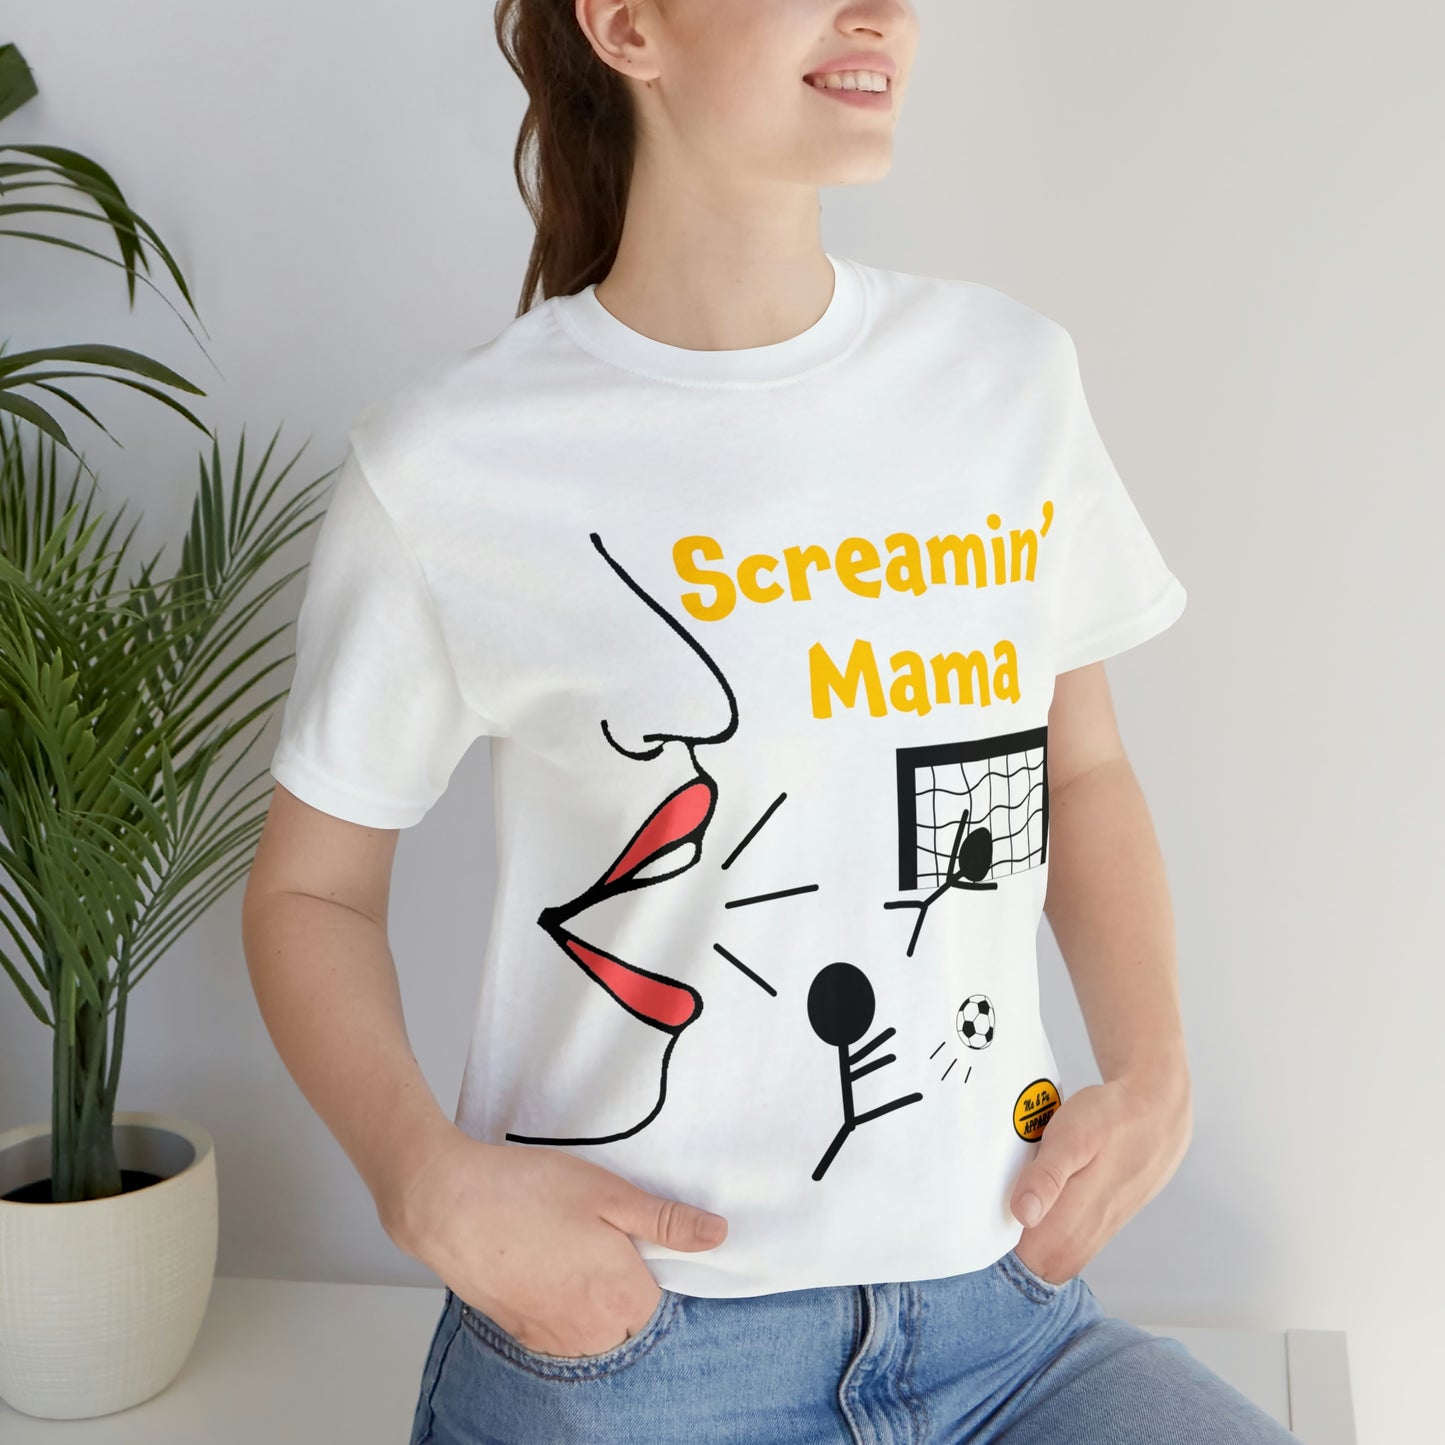 Screamin’ Mama Soccer Short Sleeve Tee